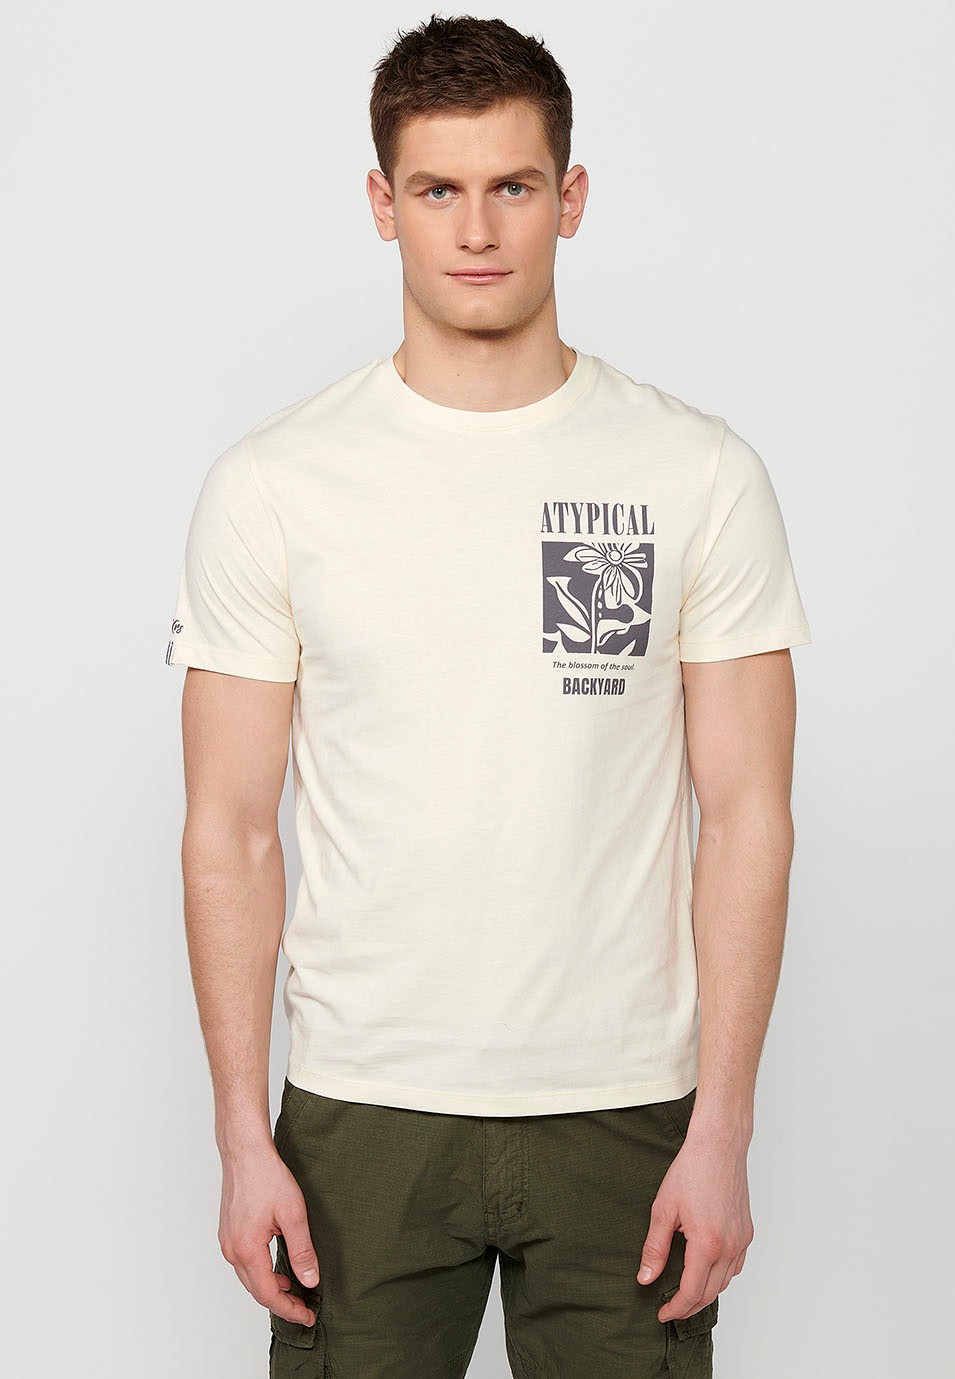 Men's black short-sleeved cotton T-shirt, round neck and cream print